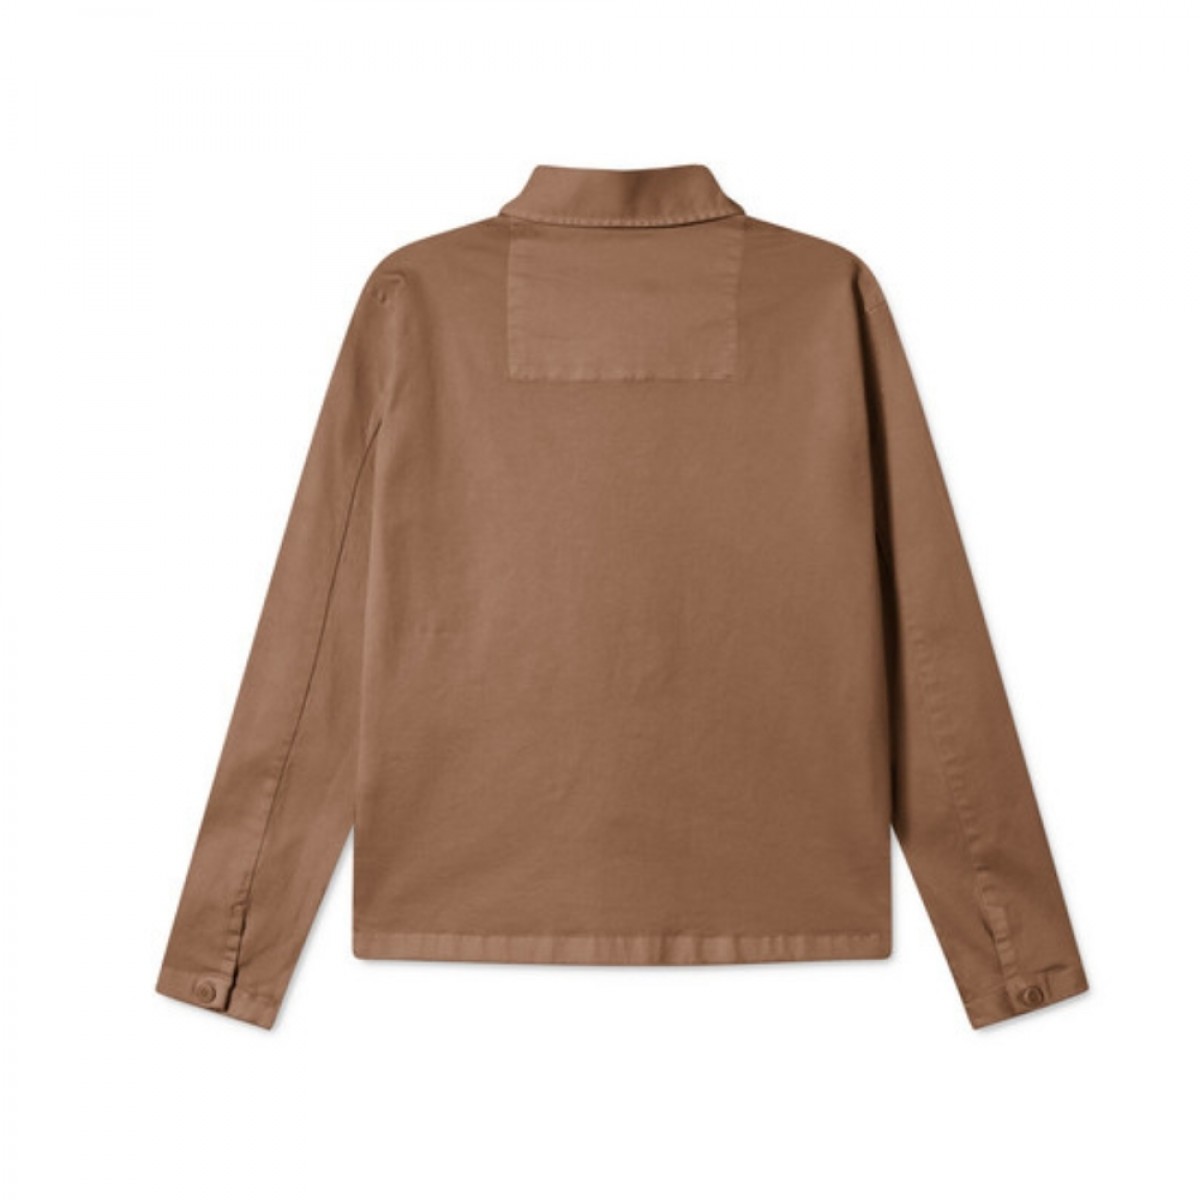 cameron gmtd jacket - deep brown - ryg